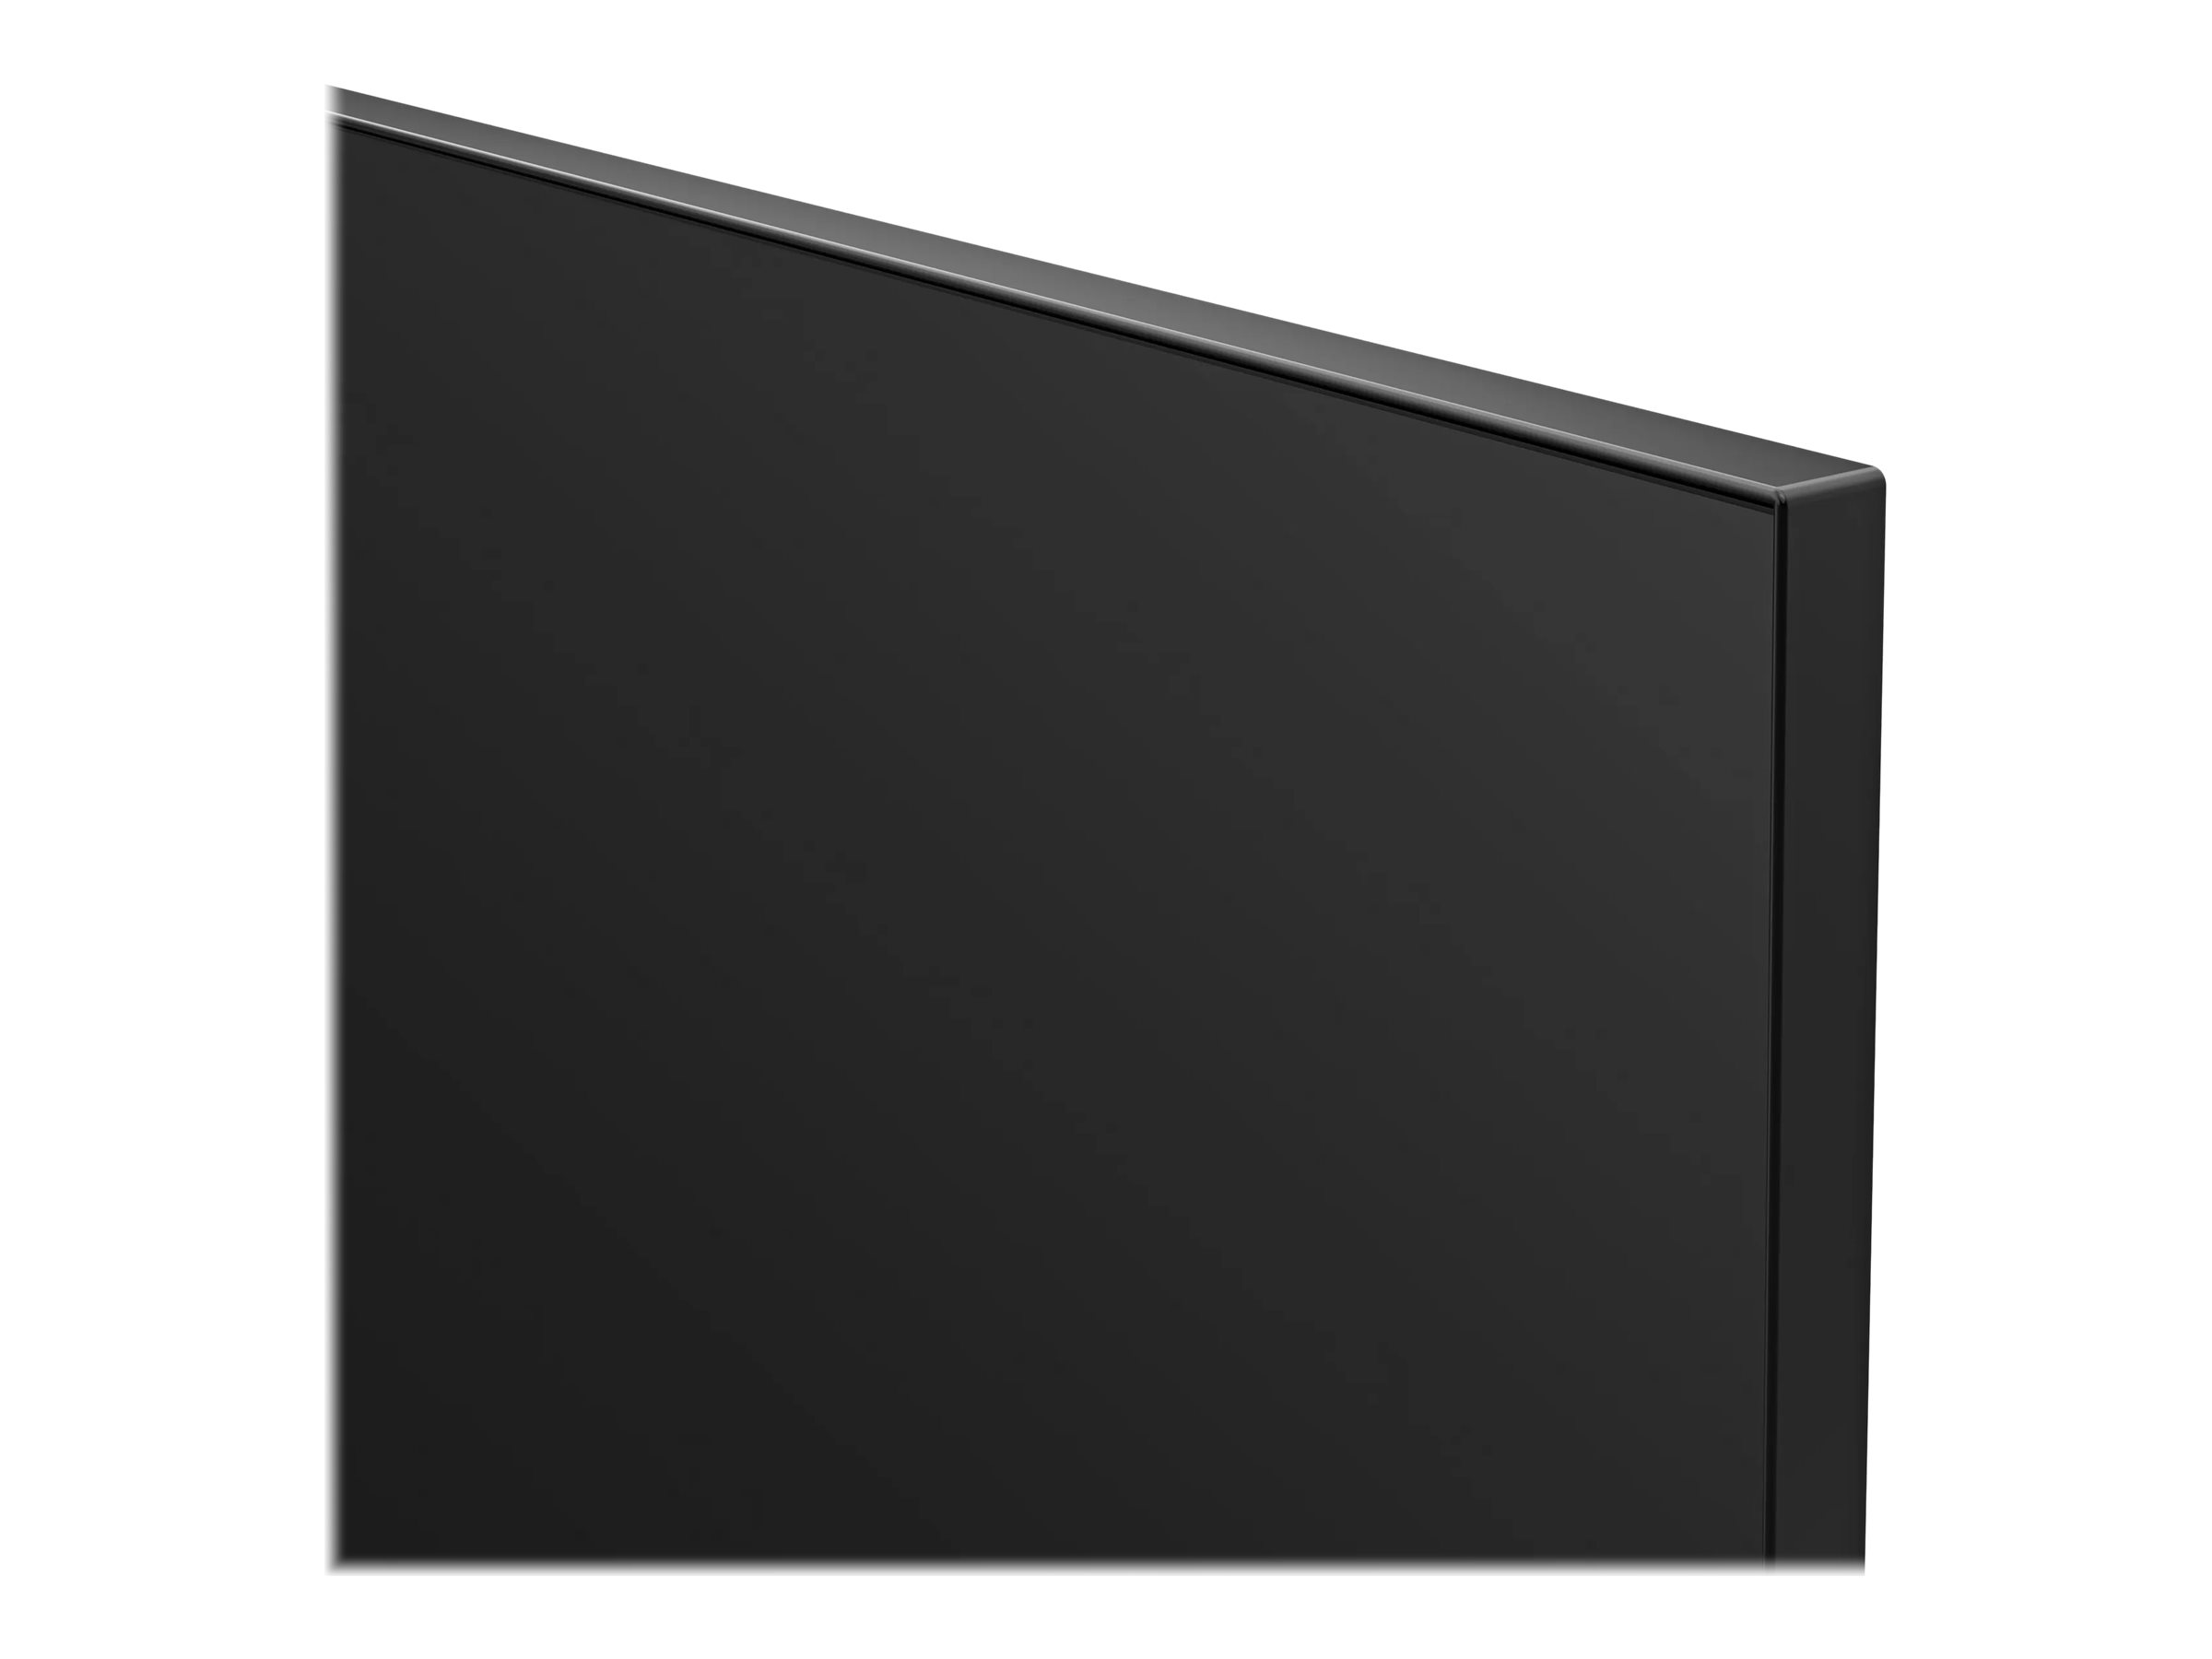 Hisense 32A4BG - 80 cm (32") Diagonalklasse LCD-TV mit LED-Hintergrundbeleuchtung